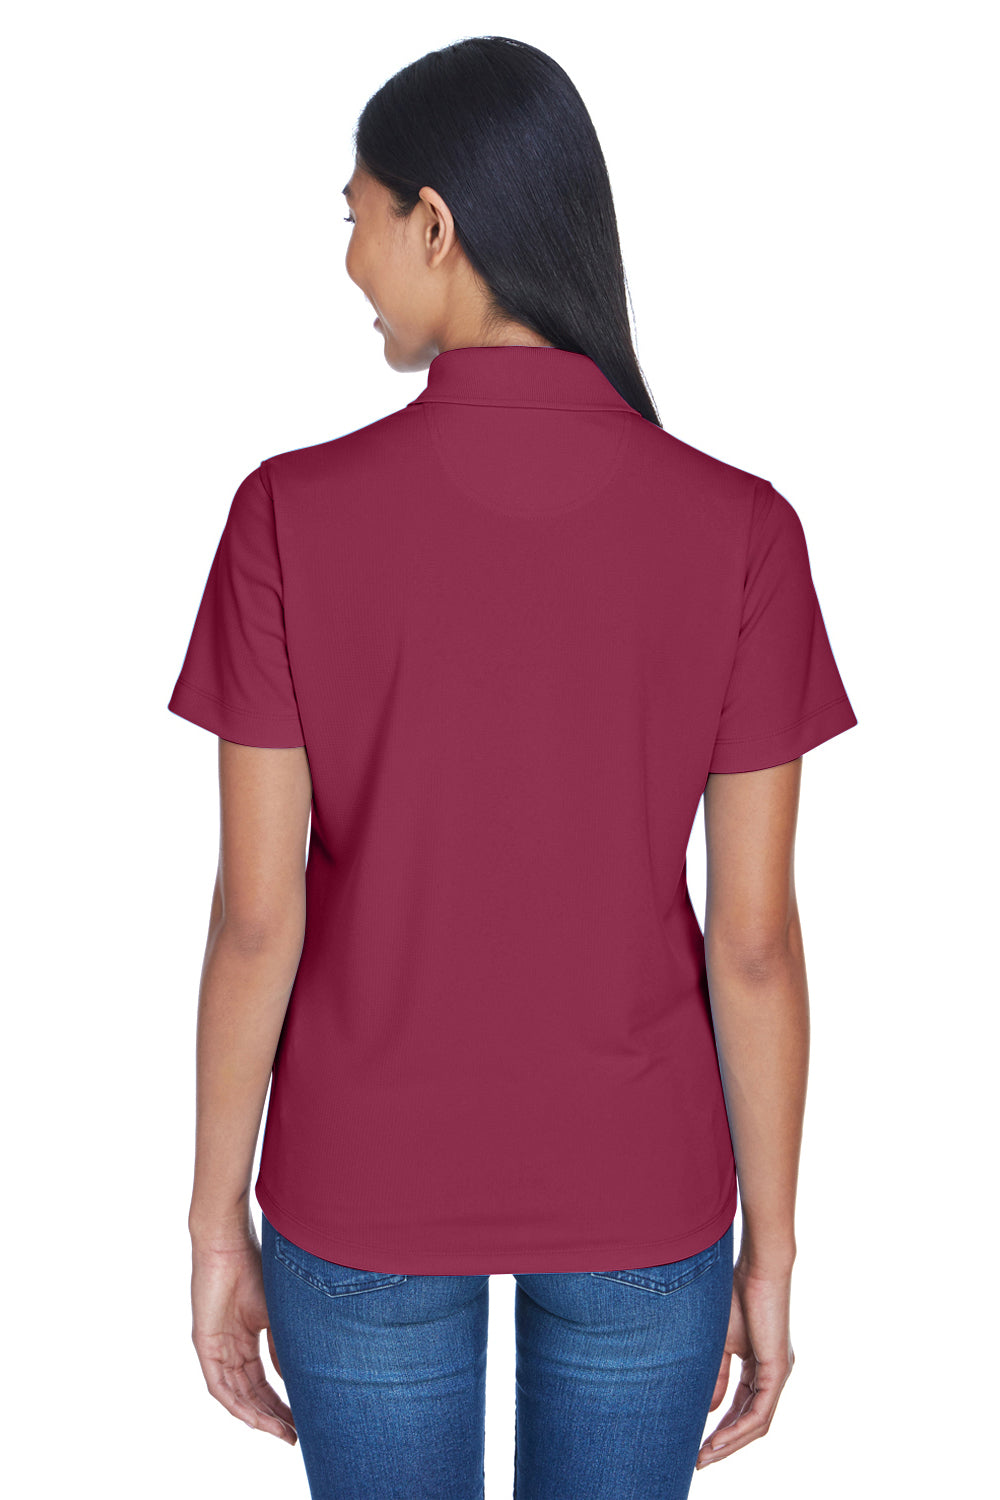 UltraClub 8445L Womens Cool & Dry Performance Moisture Wicking Short Sleeve Polo Shirt Maroon Back